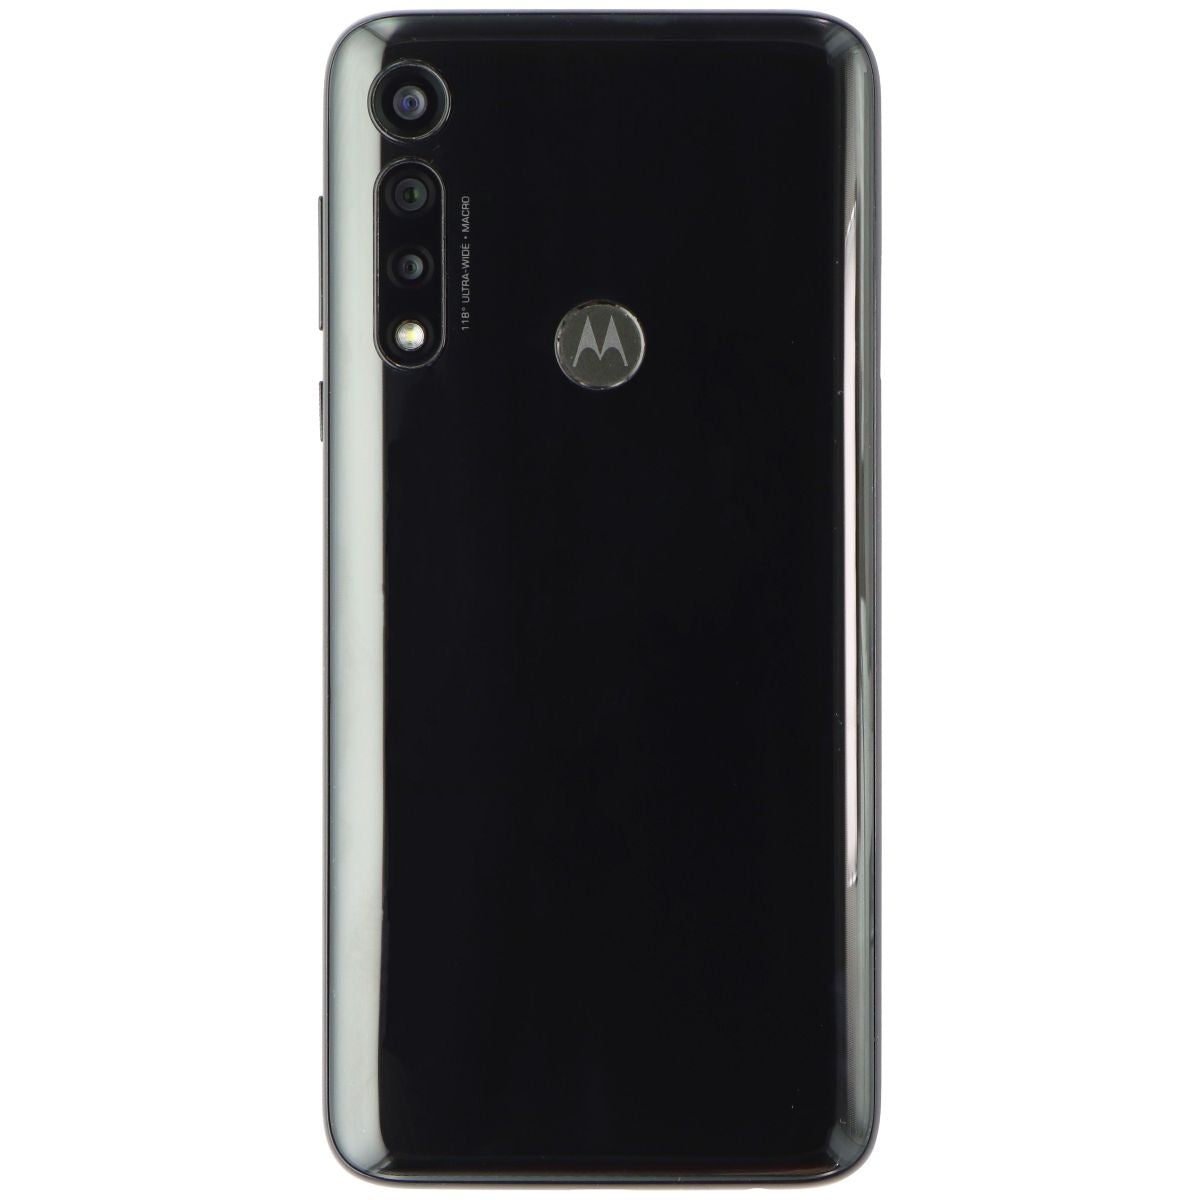 Motorola Moto G Power (6.4-inch) 2020 (XT2041-4) Unlocked - 64GB/Black Cell Phones & Smartphones Motorola    - Simple Cell Bulk Wholesale Pricing - USA Seller